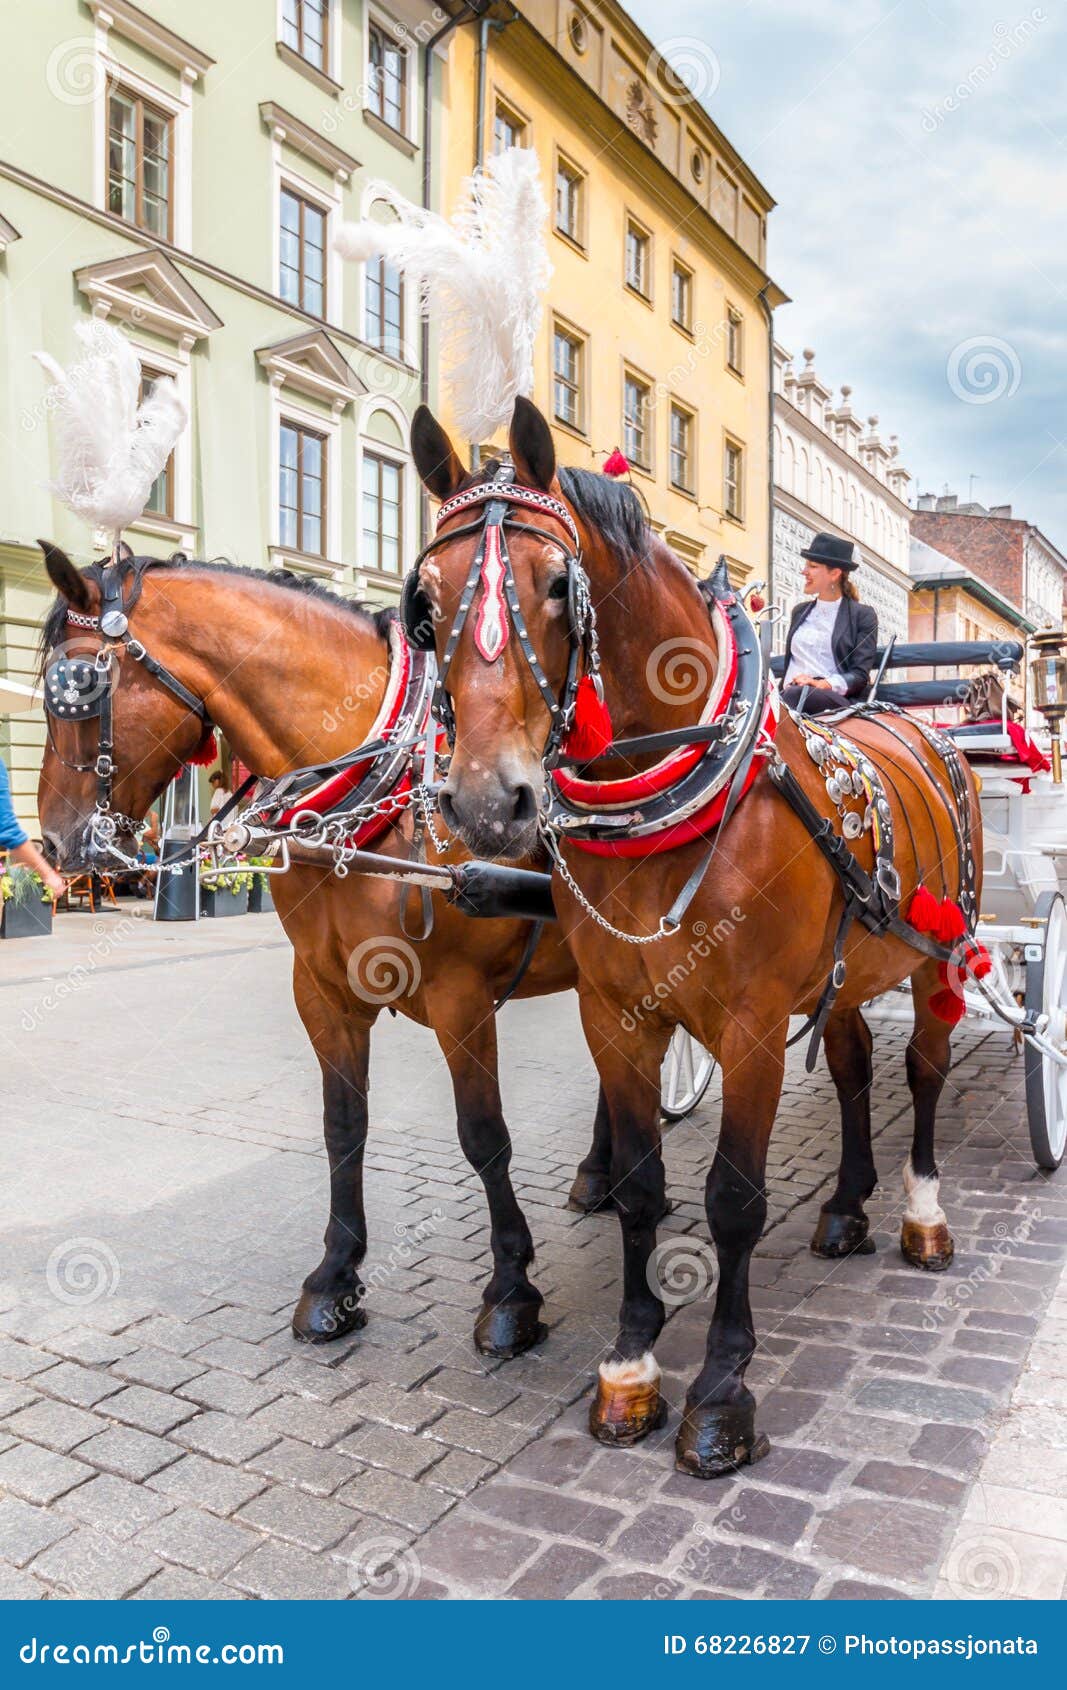 horse tour krakow